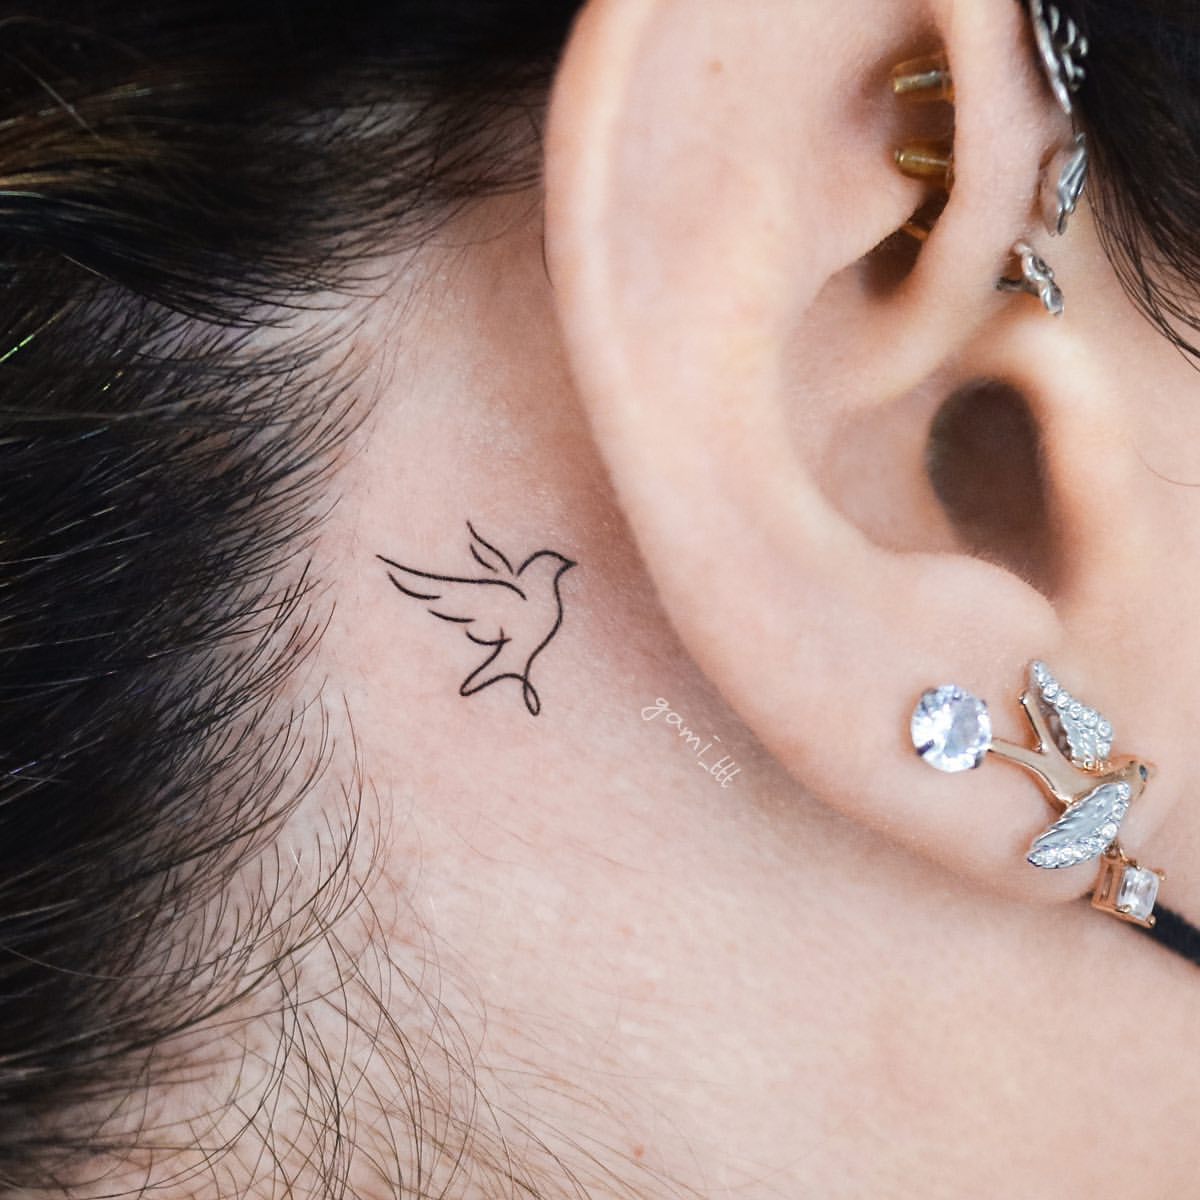 Behind the Ear Tattoos 26